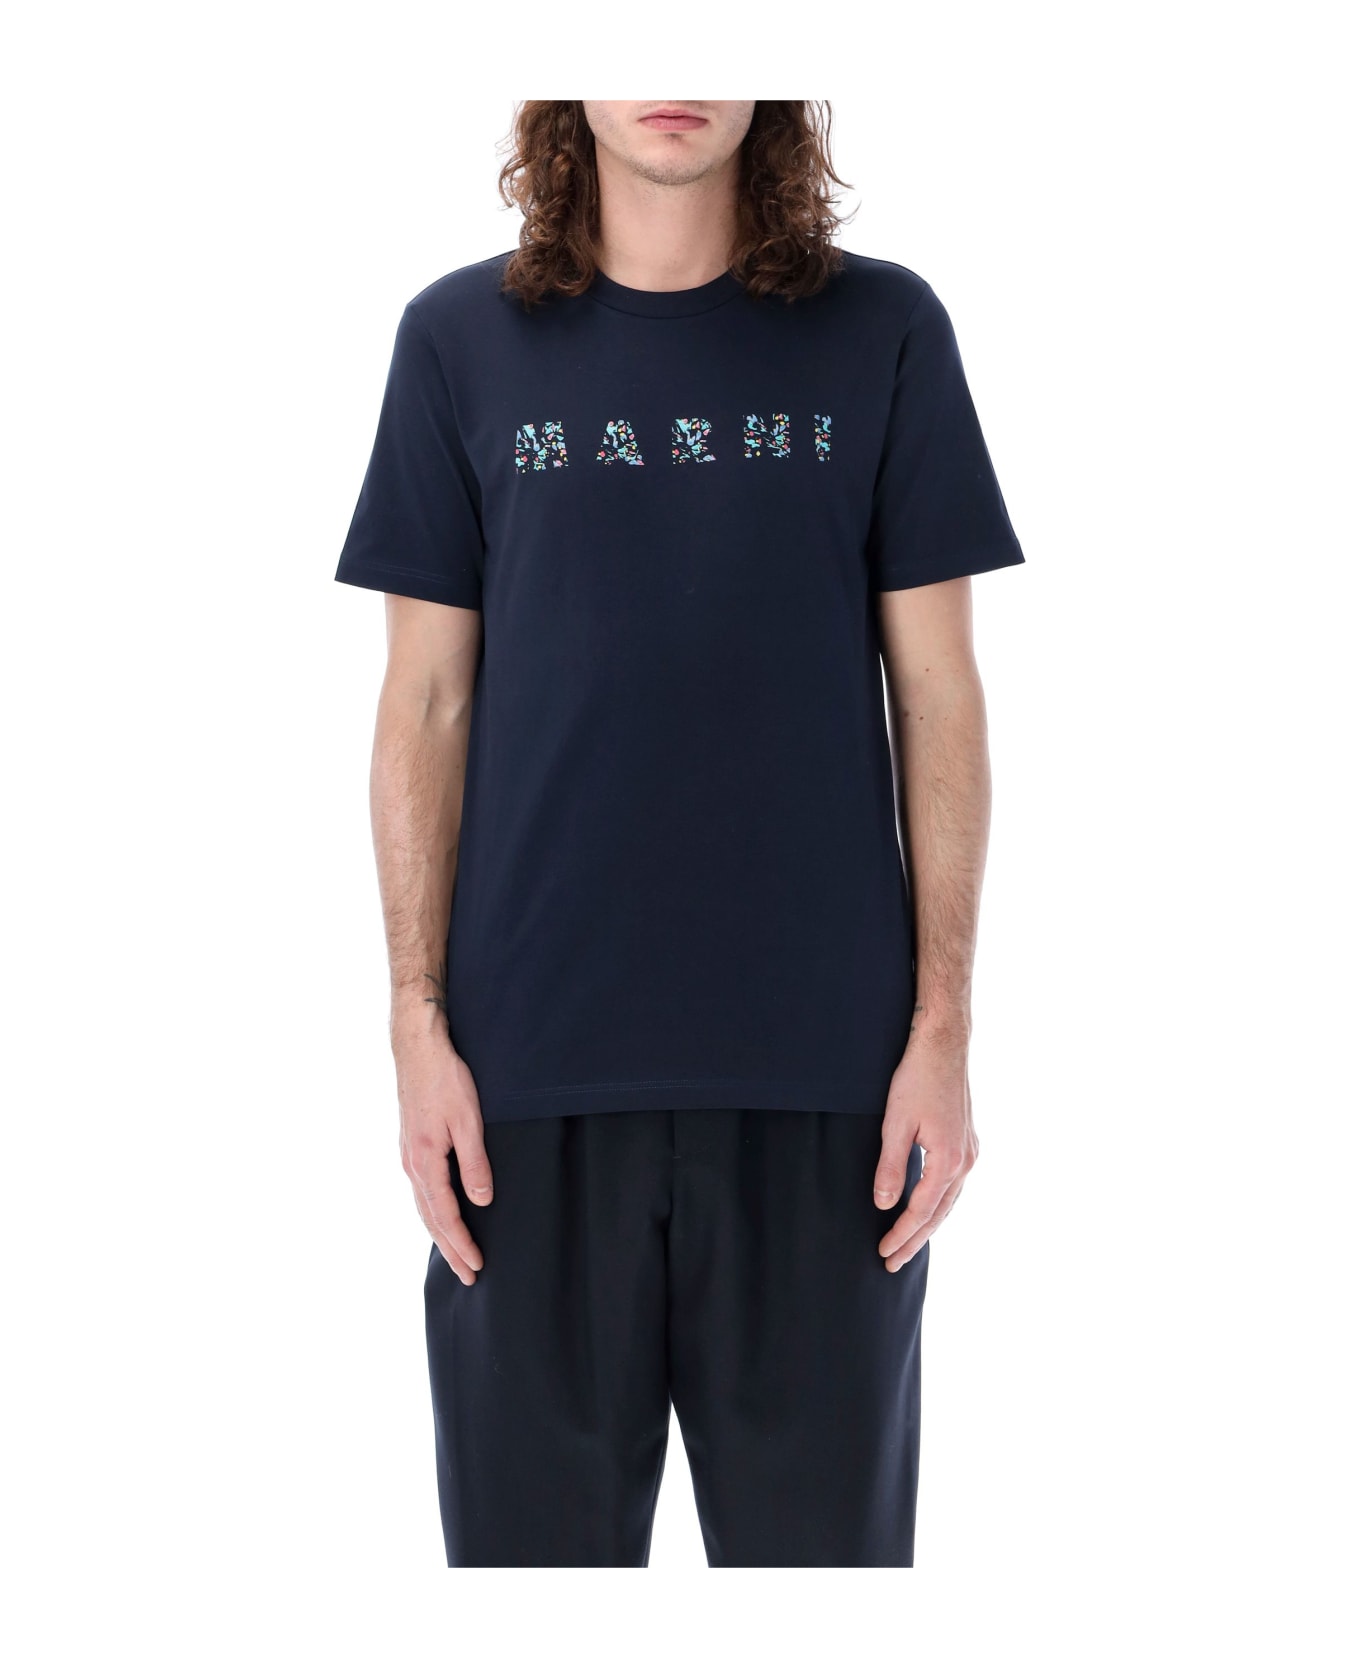 Marni Logo Flowers T-shirt - NAVY シャツ